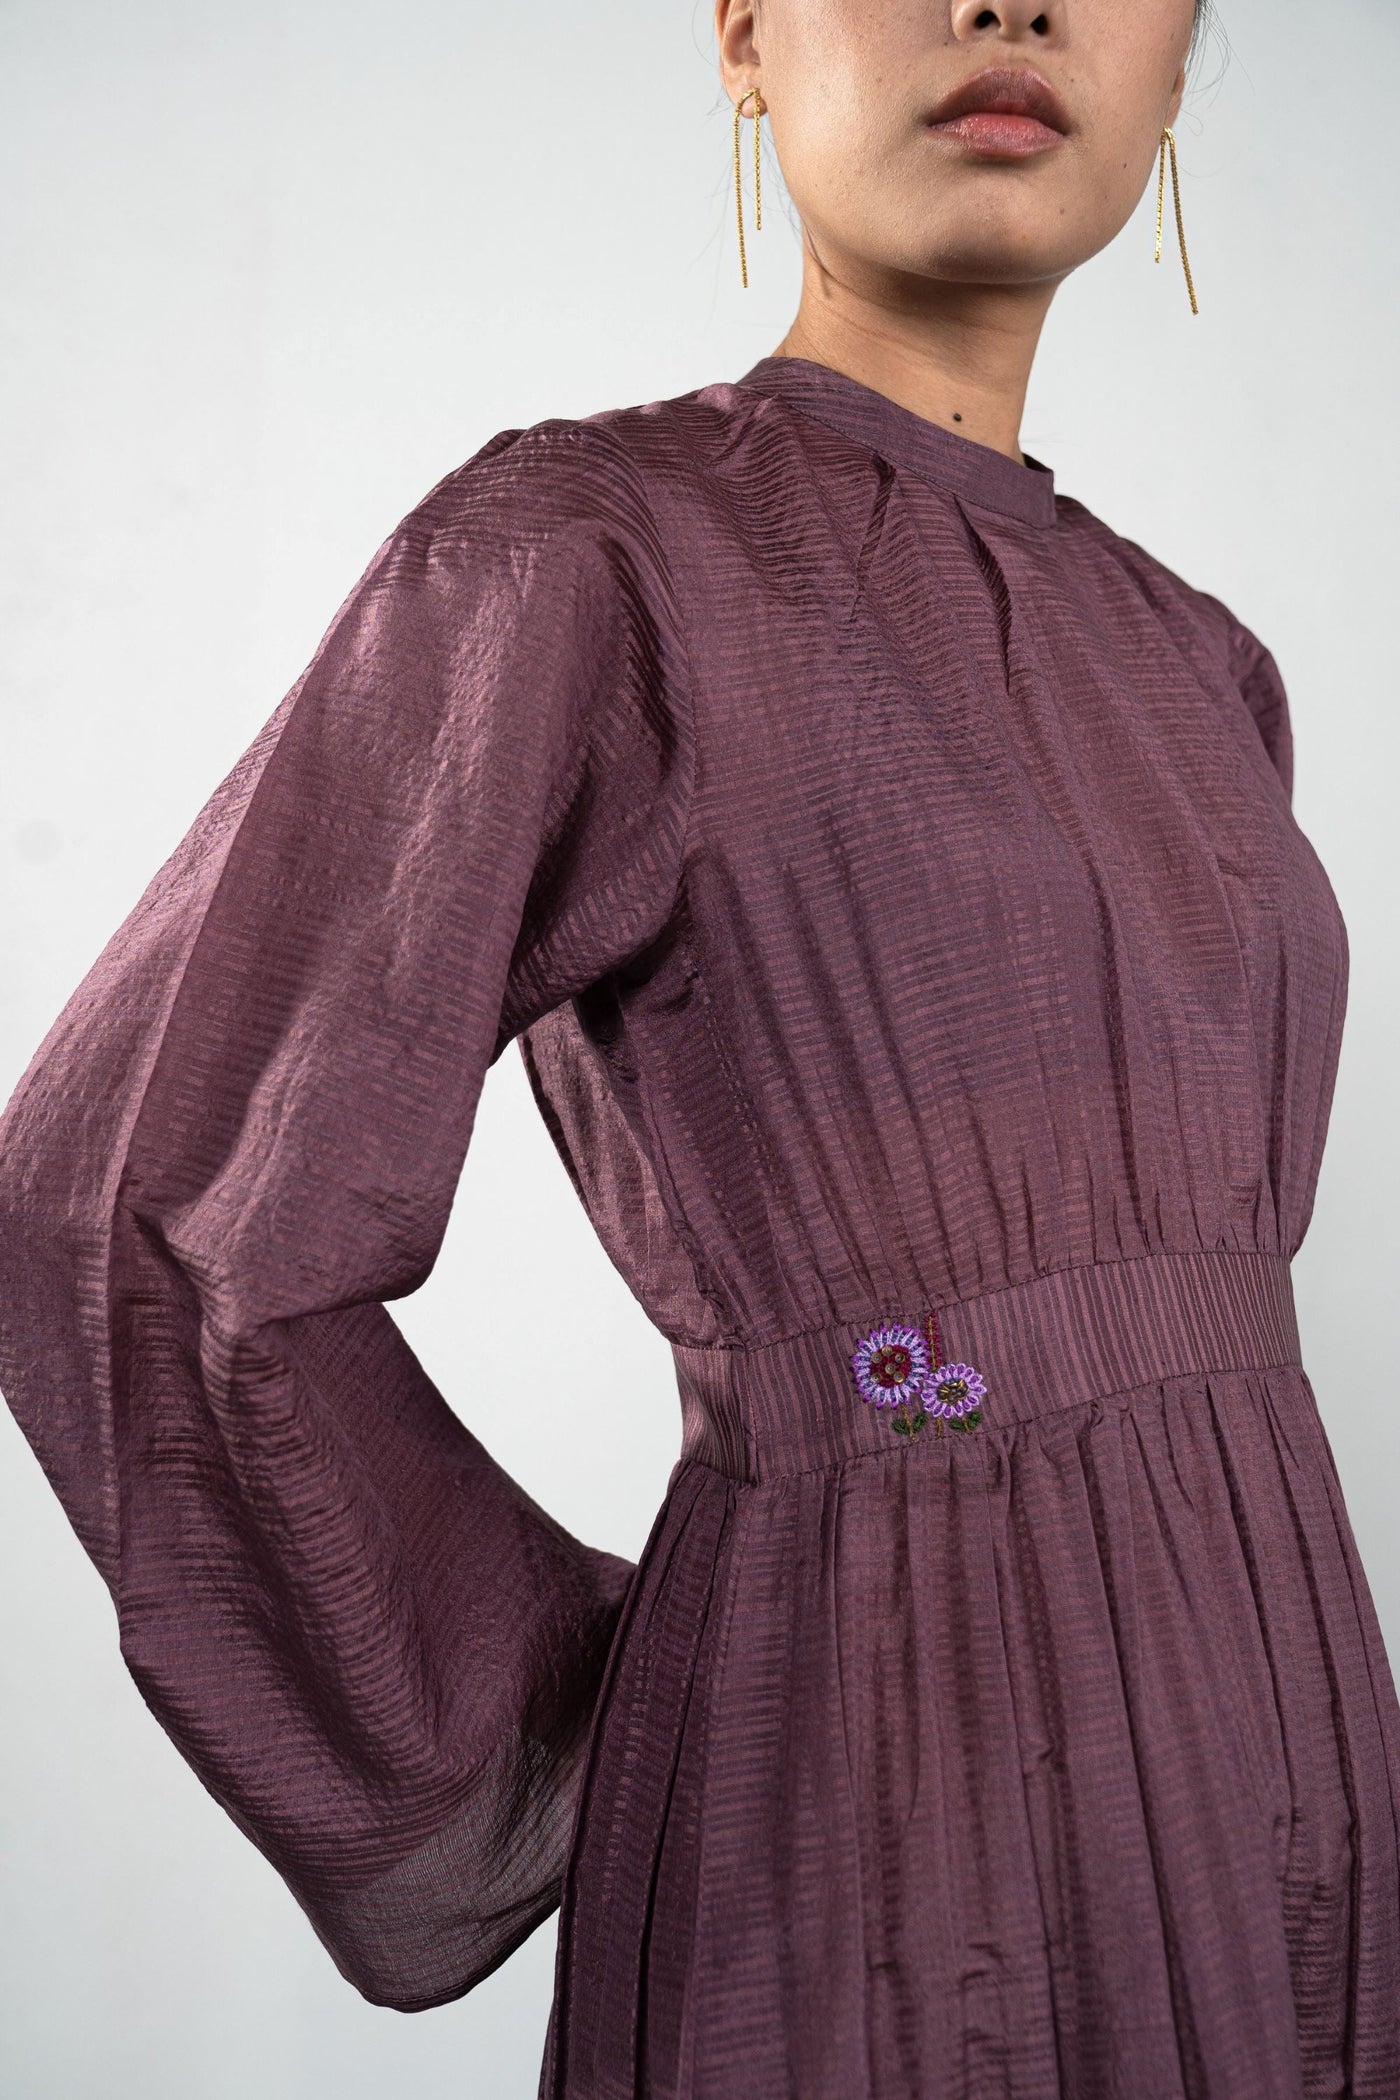 The Dusk handwoven silk dress Fashion SUI 